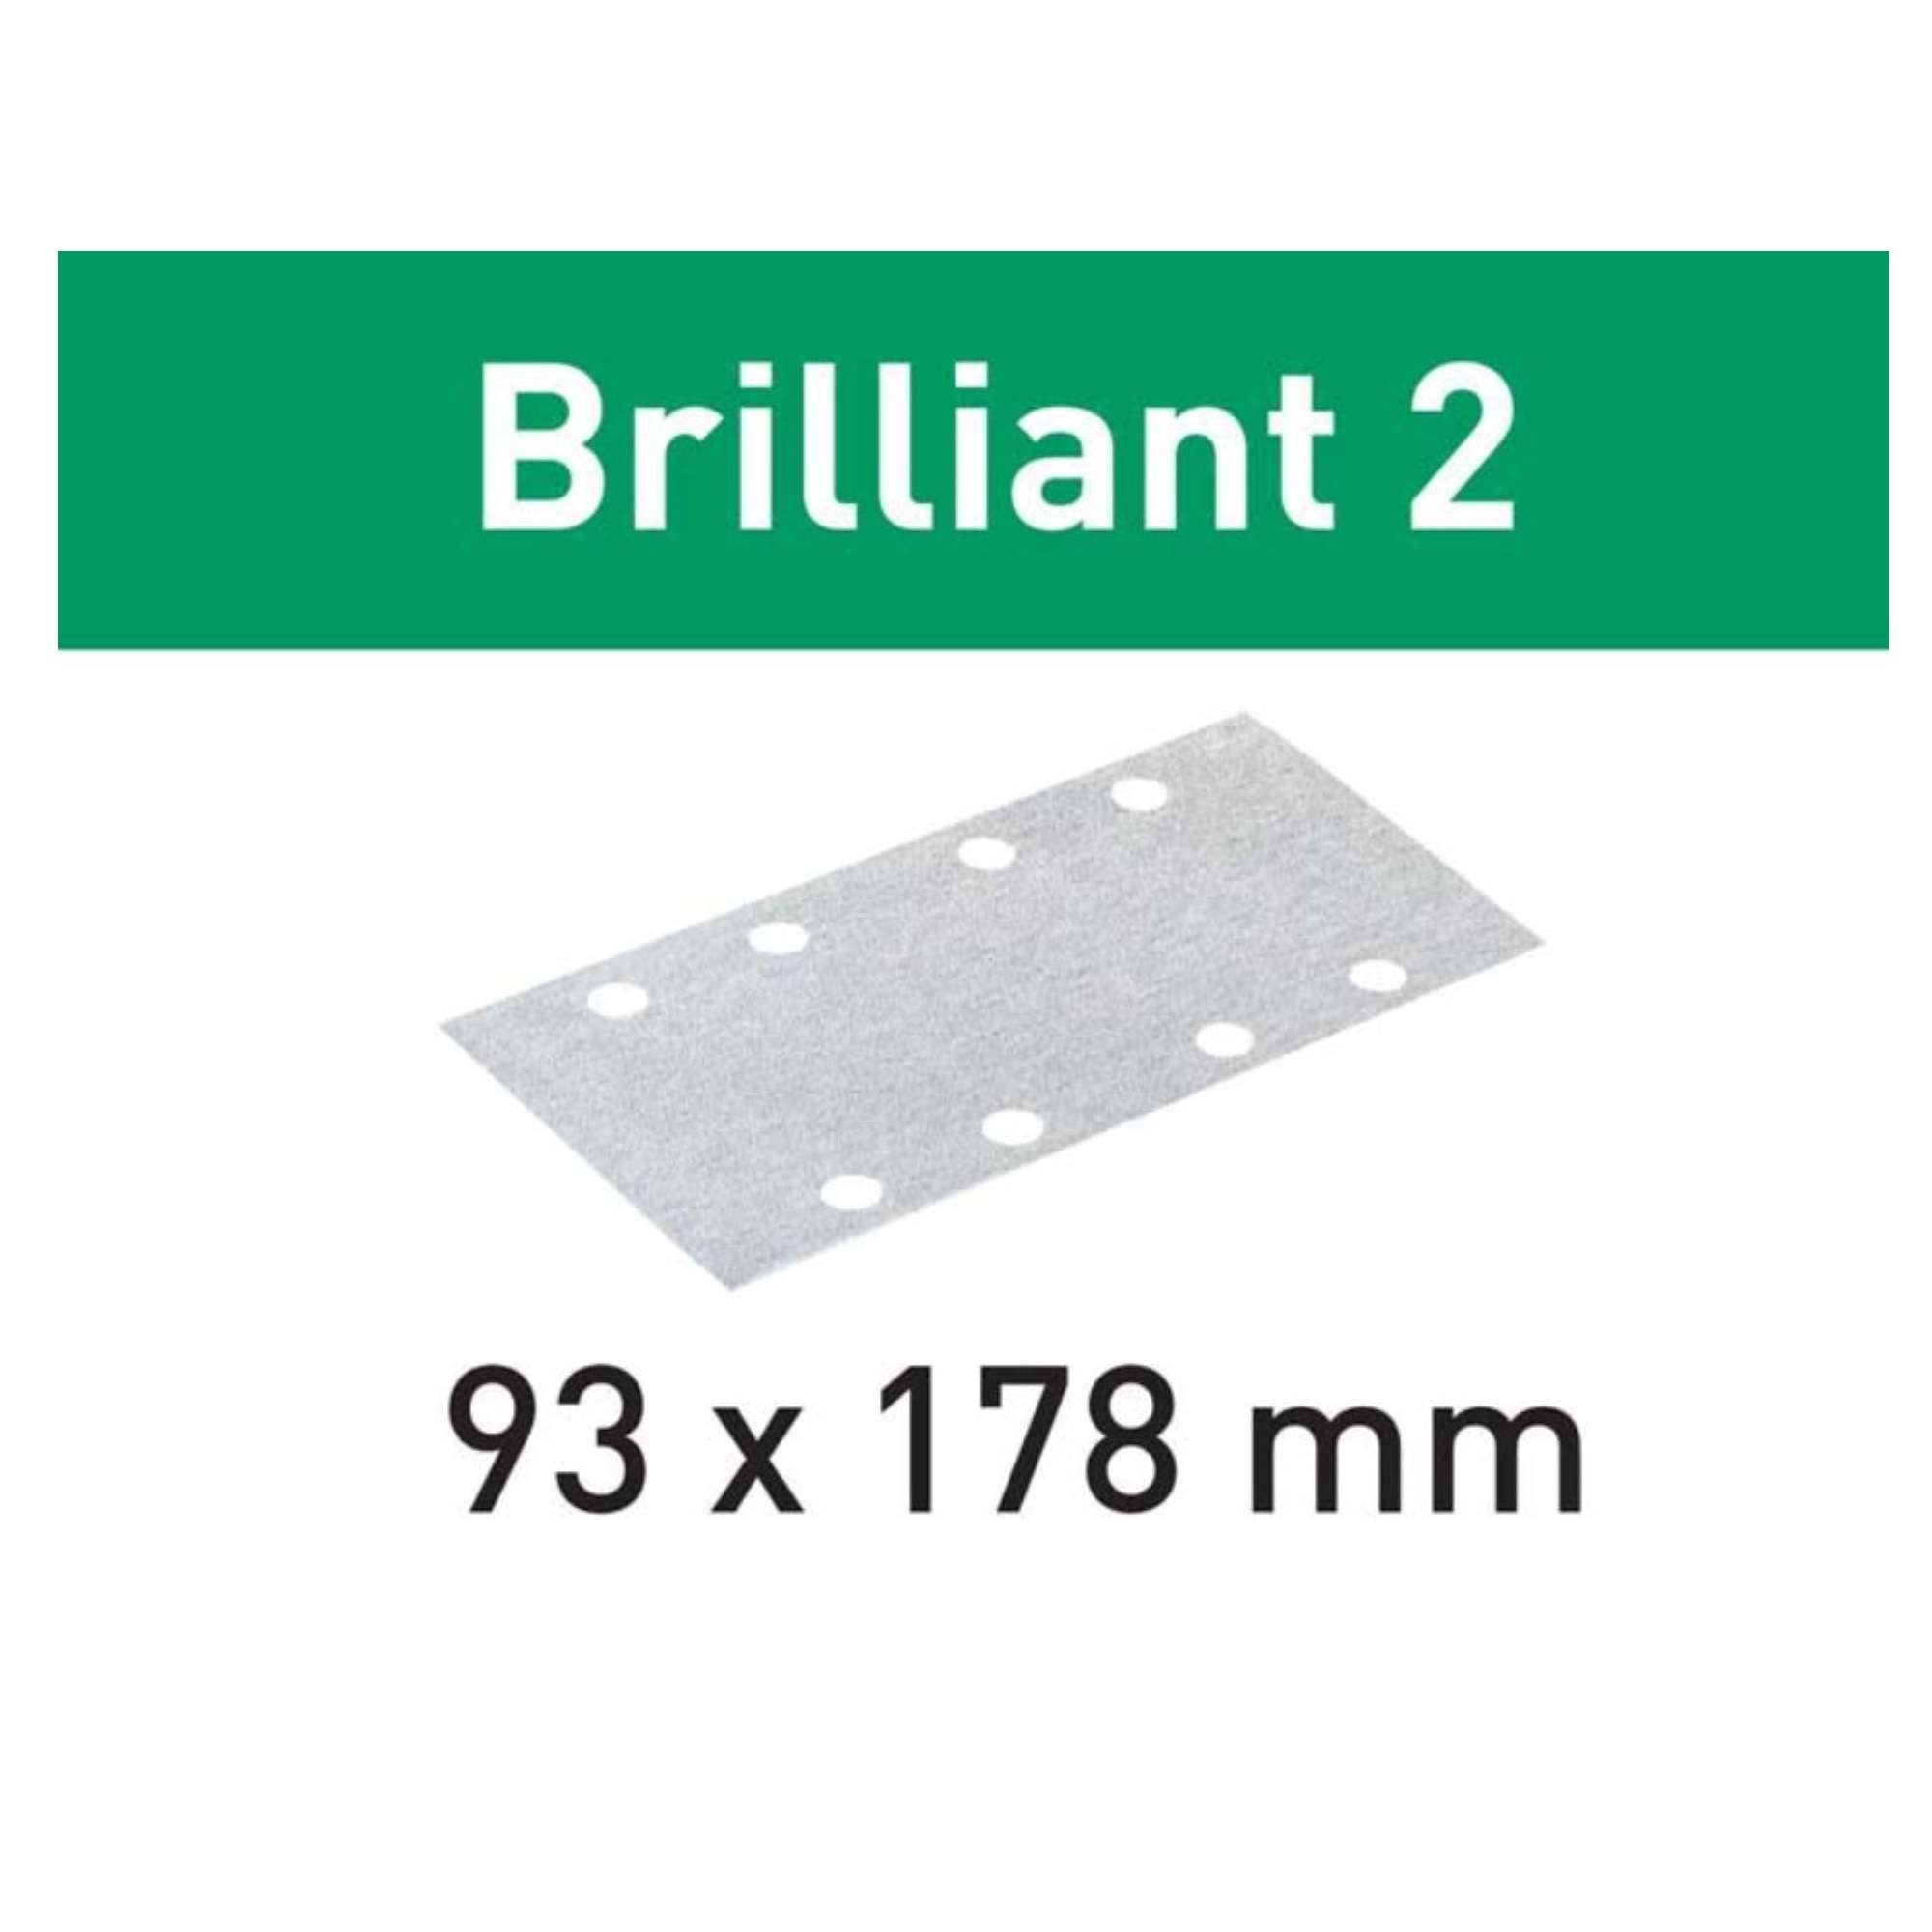 Abrasive Brilli STF93X178/8- P320-BR2/ 100 PZ.100 -492920